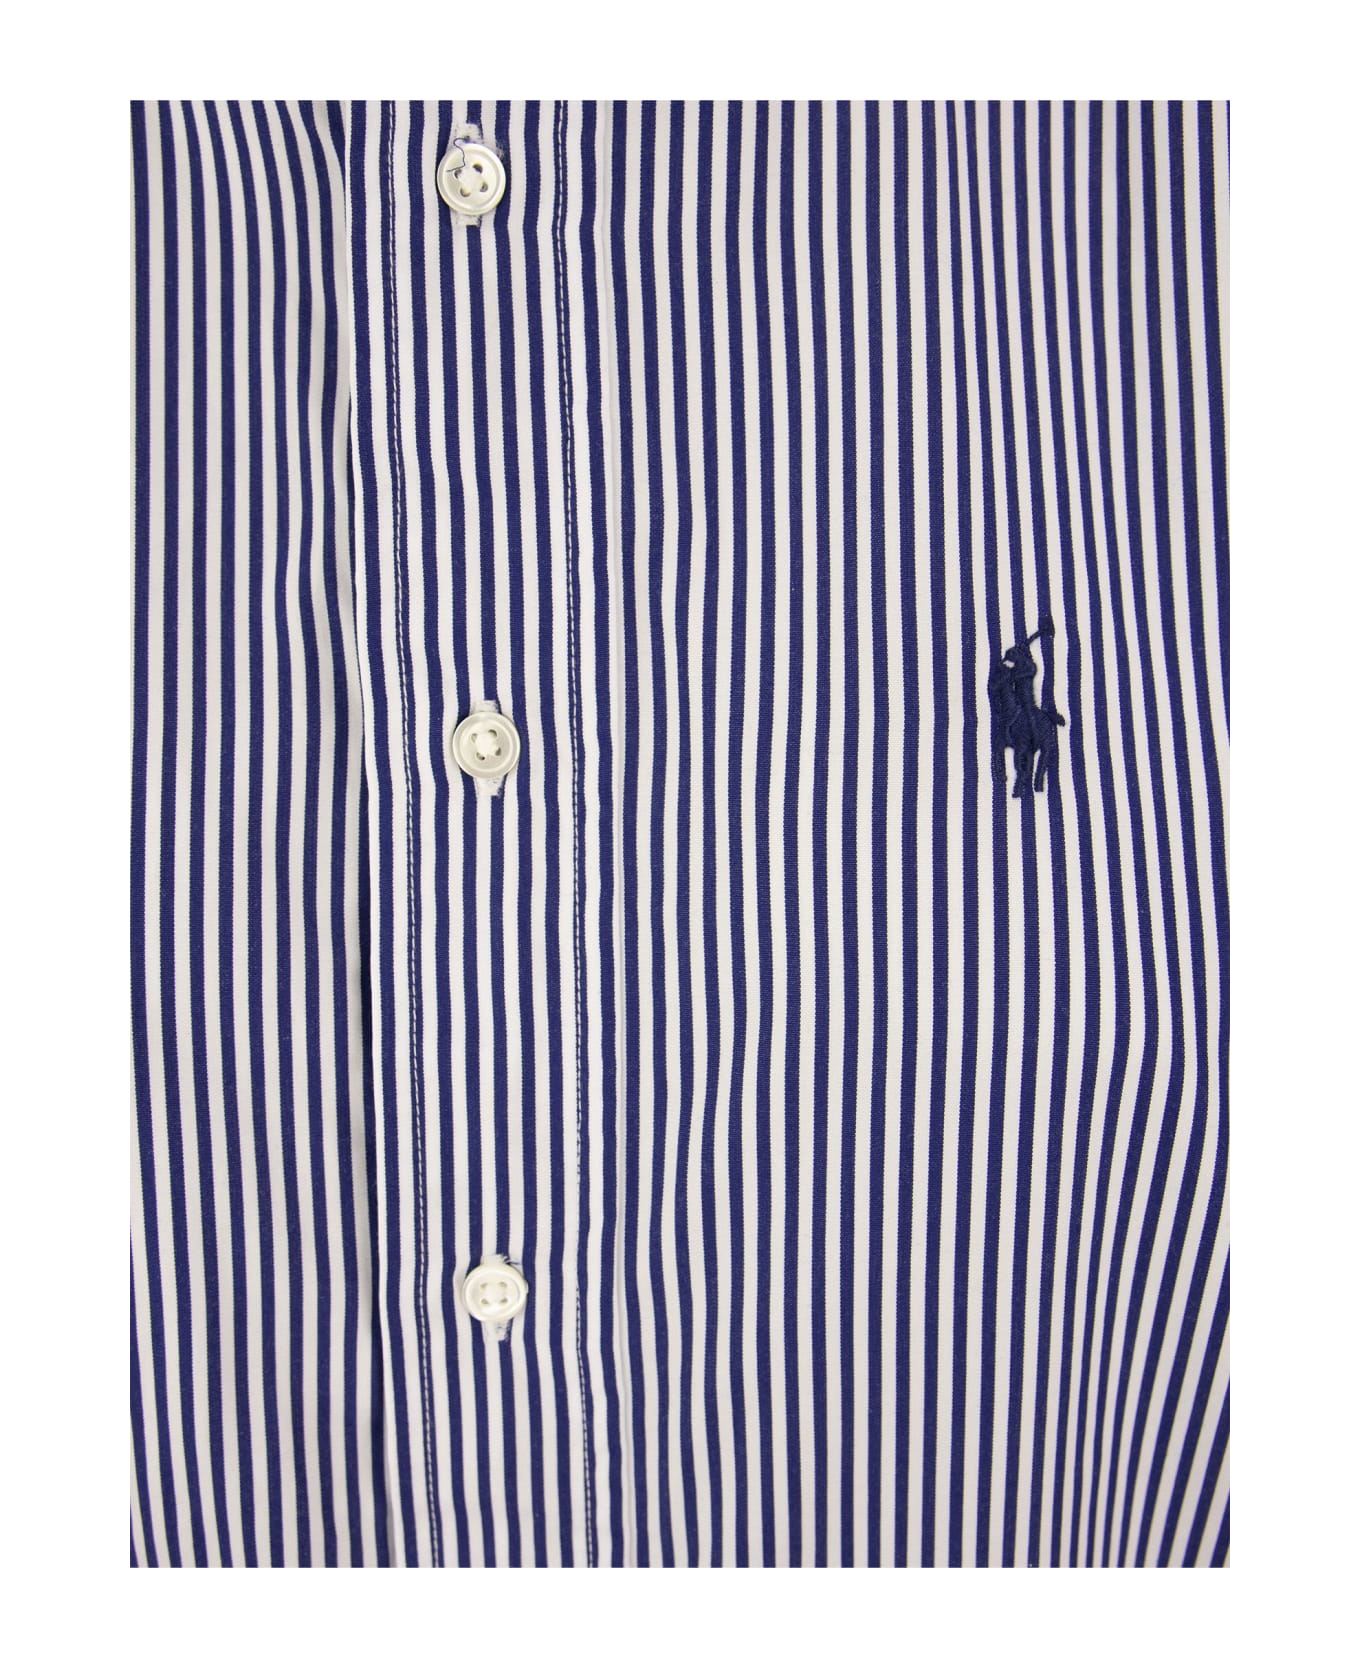 Polo Ralph Lauren Chemisier With Stripes Polo Ralph Lauren - Blue/white